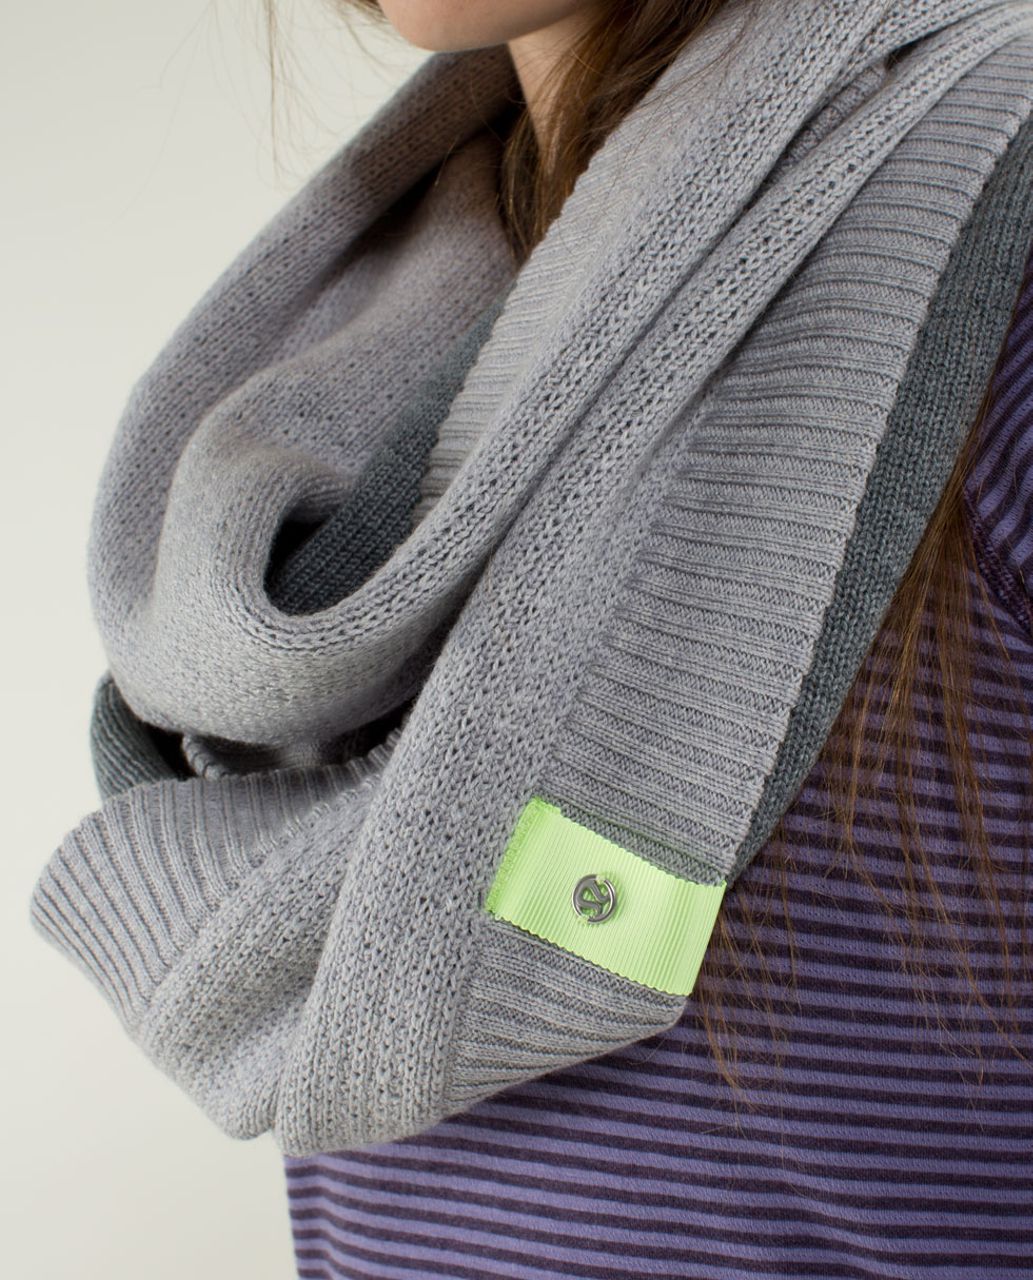 Lululemon Knit Happens Scarf - Heathered Light Grey / Heathered Medium Grey